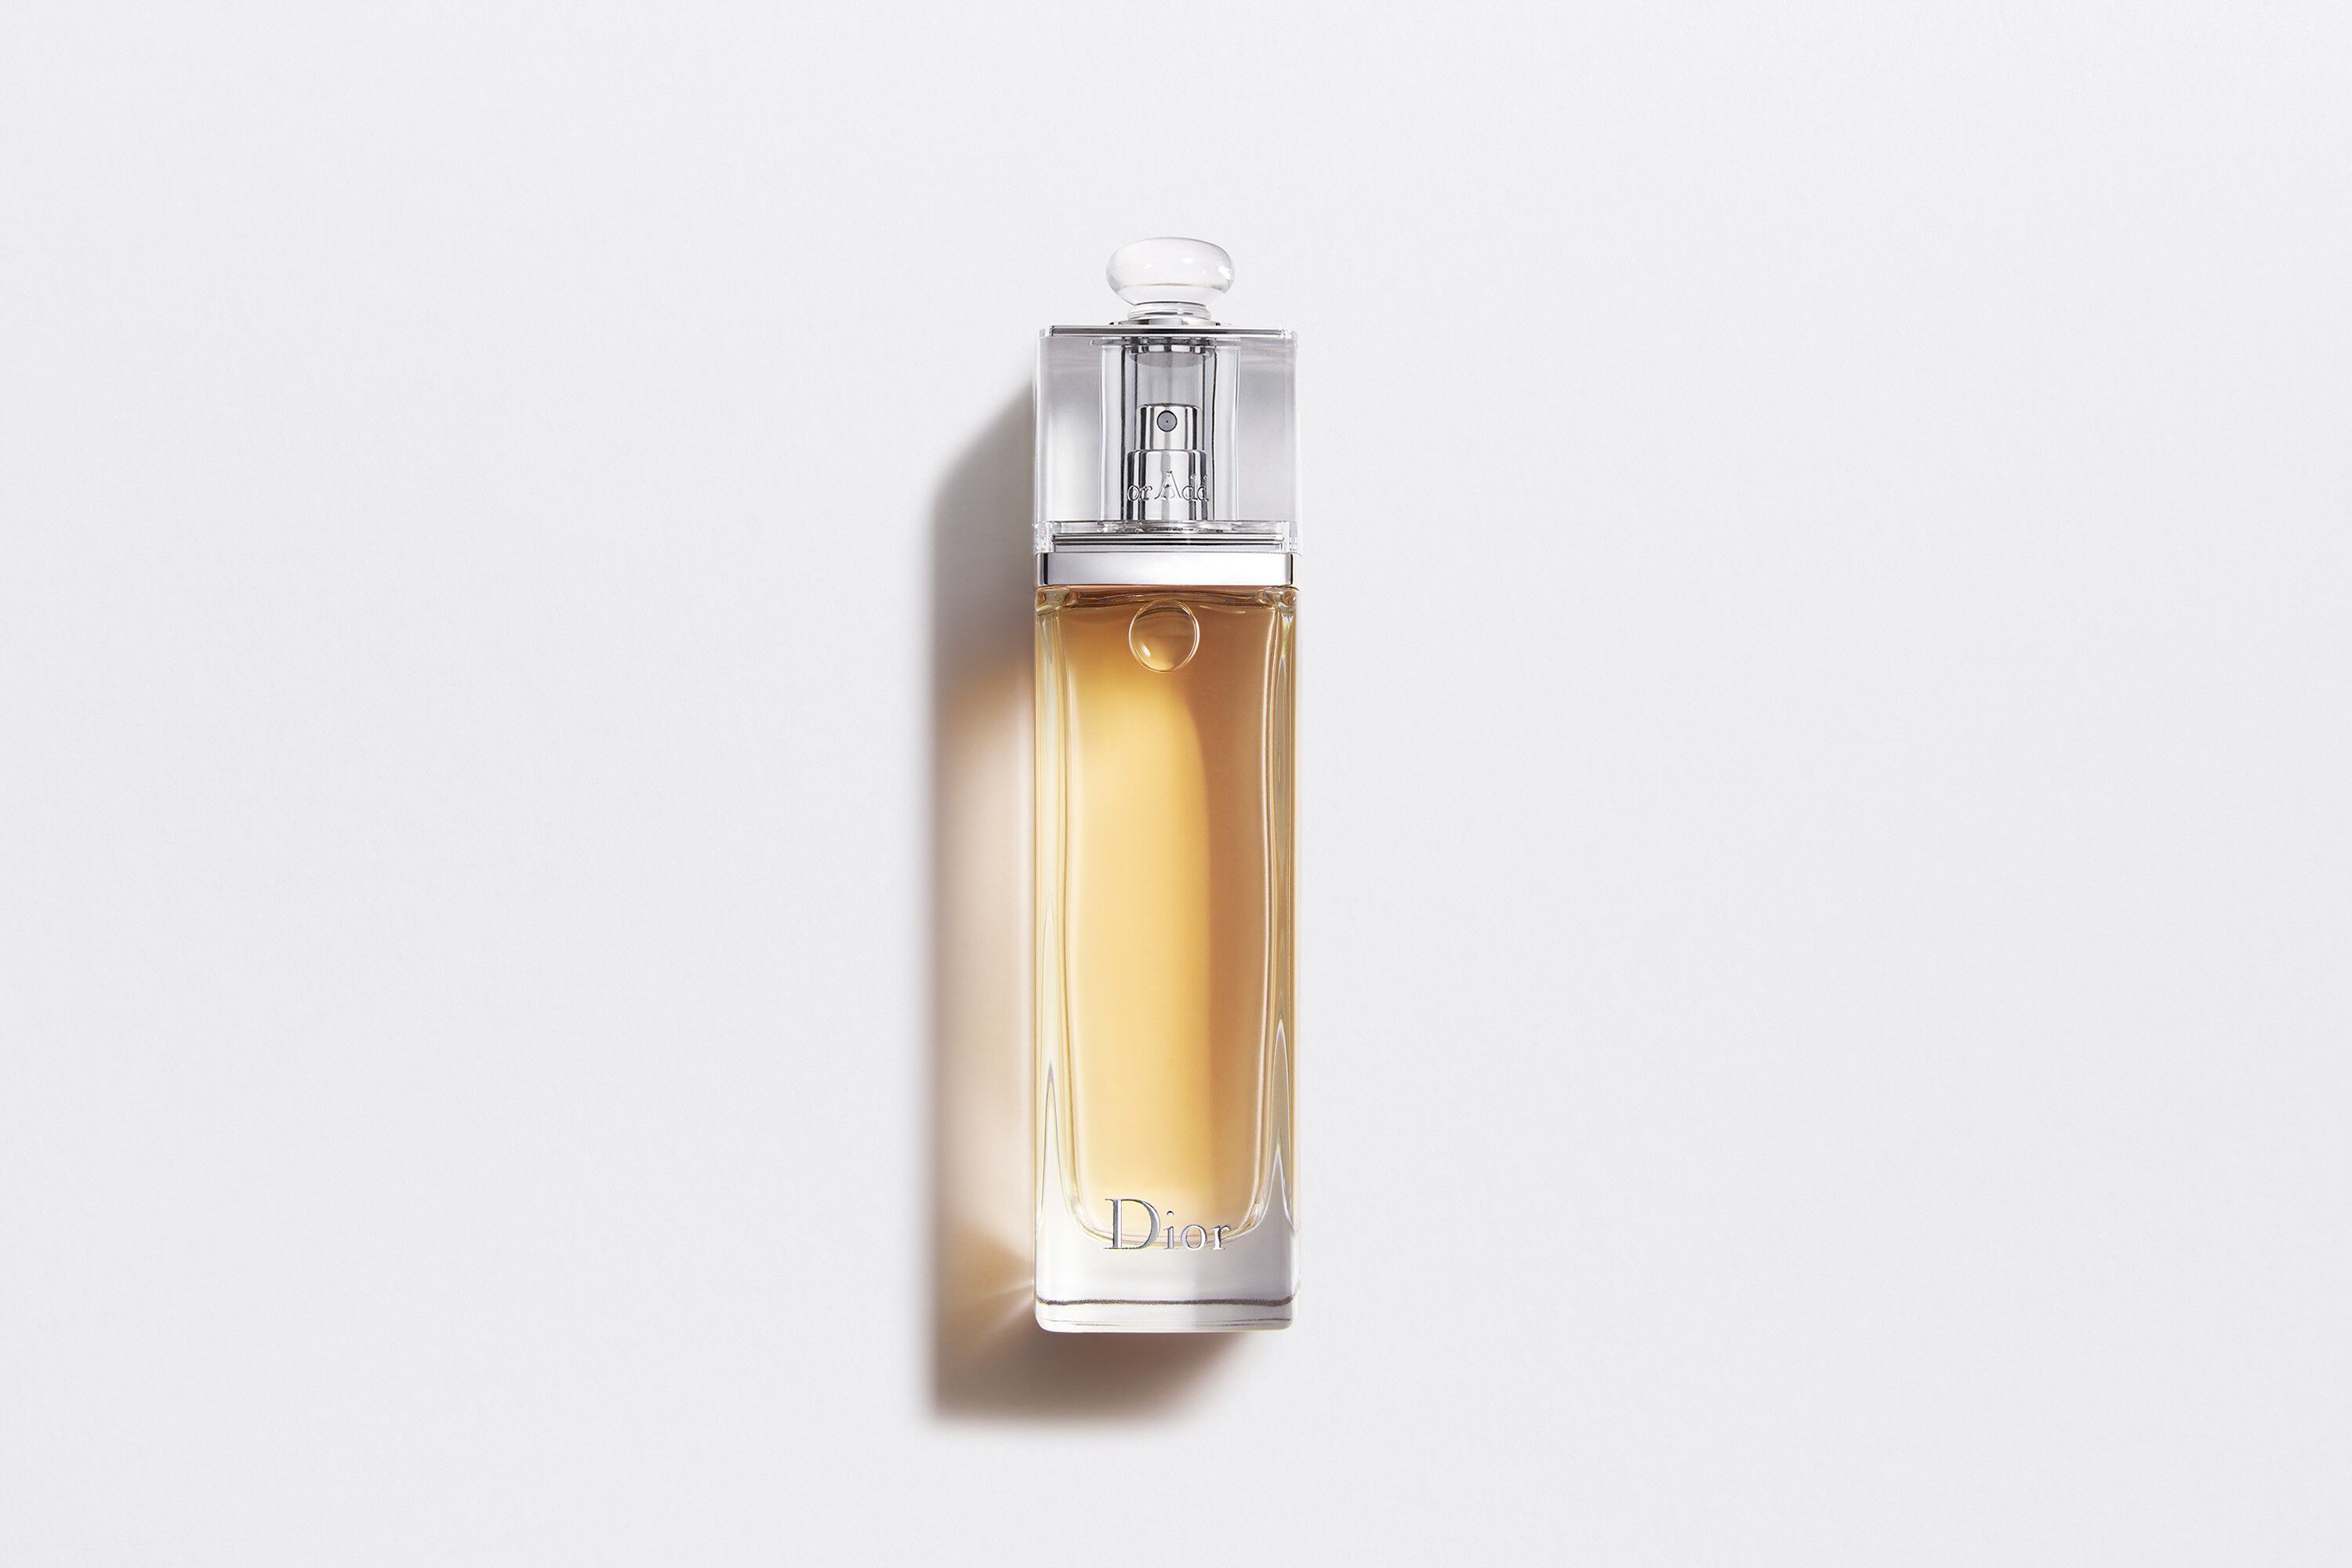 constant Hoofdkwartier Zelfrespect Dior Addict Eau de toilette - Women's Fragrance - Fragrance | DIOR